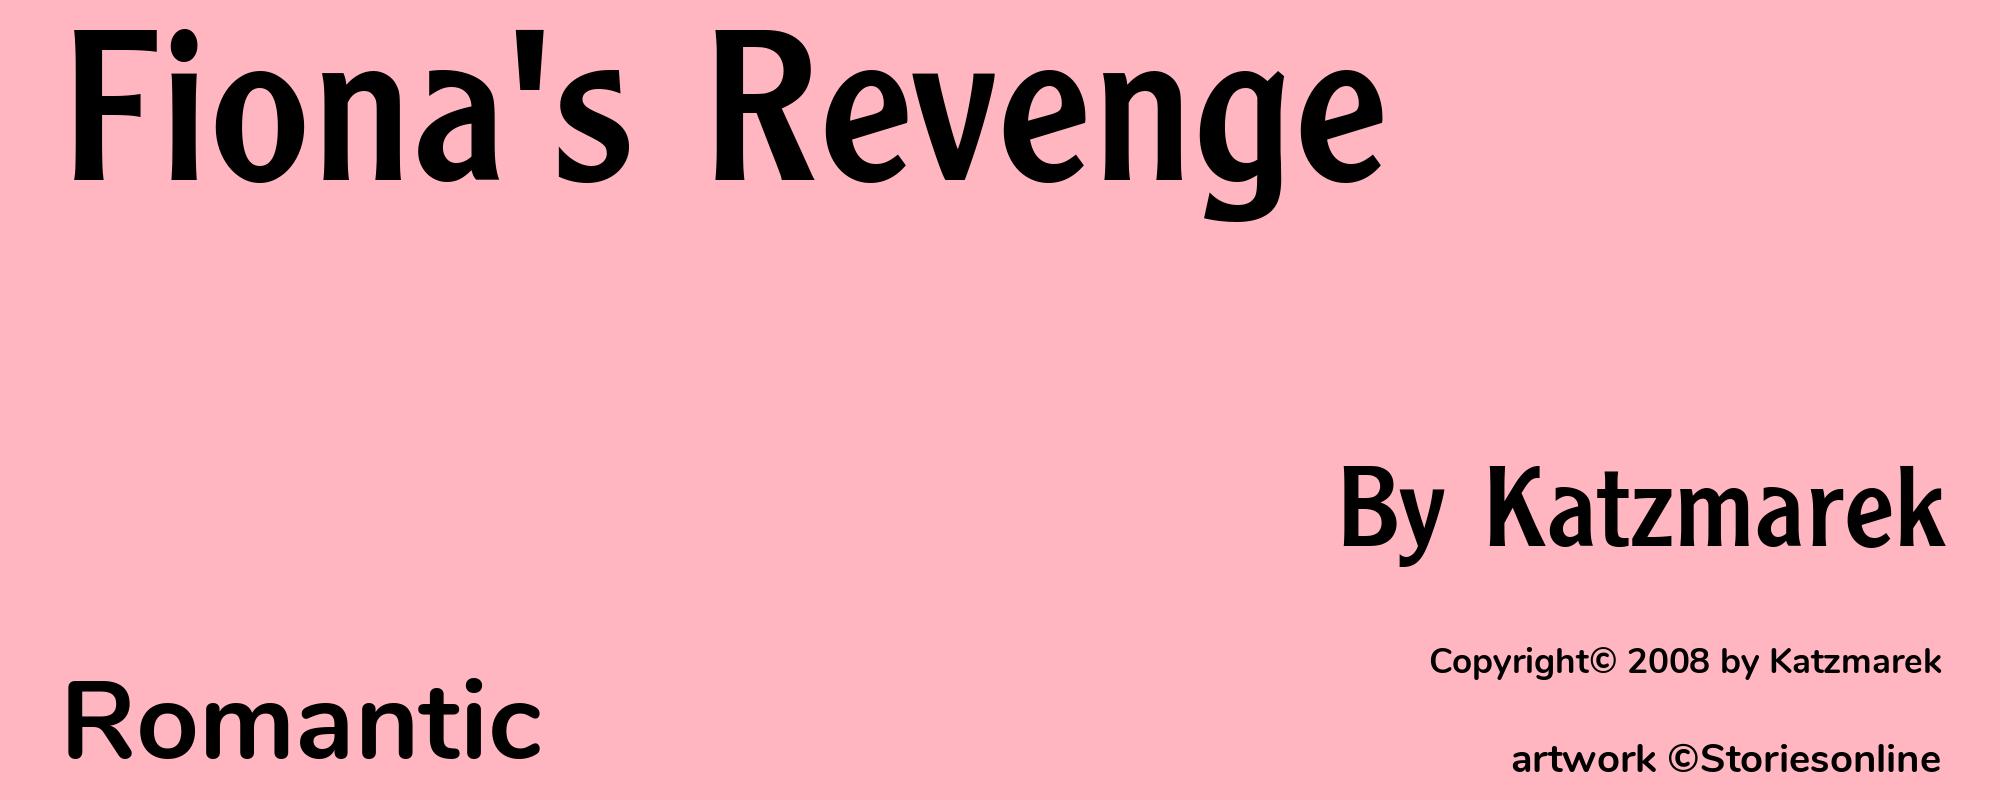 Fiona's Revenge - Cover